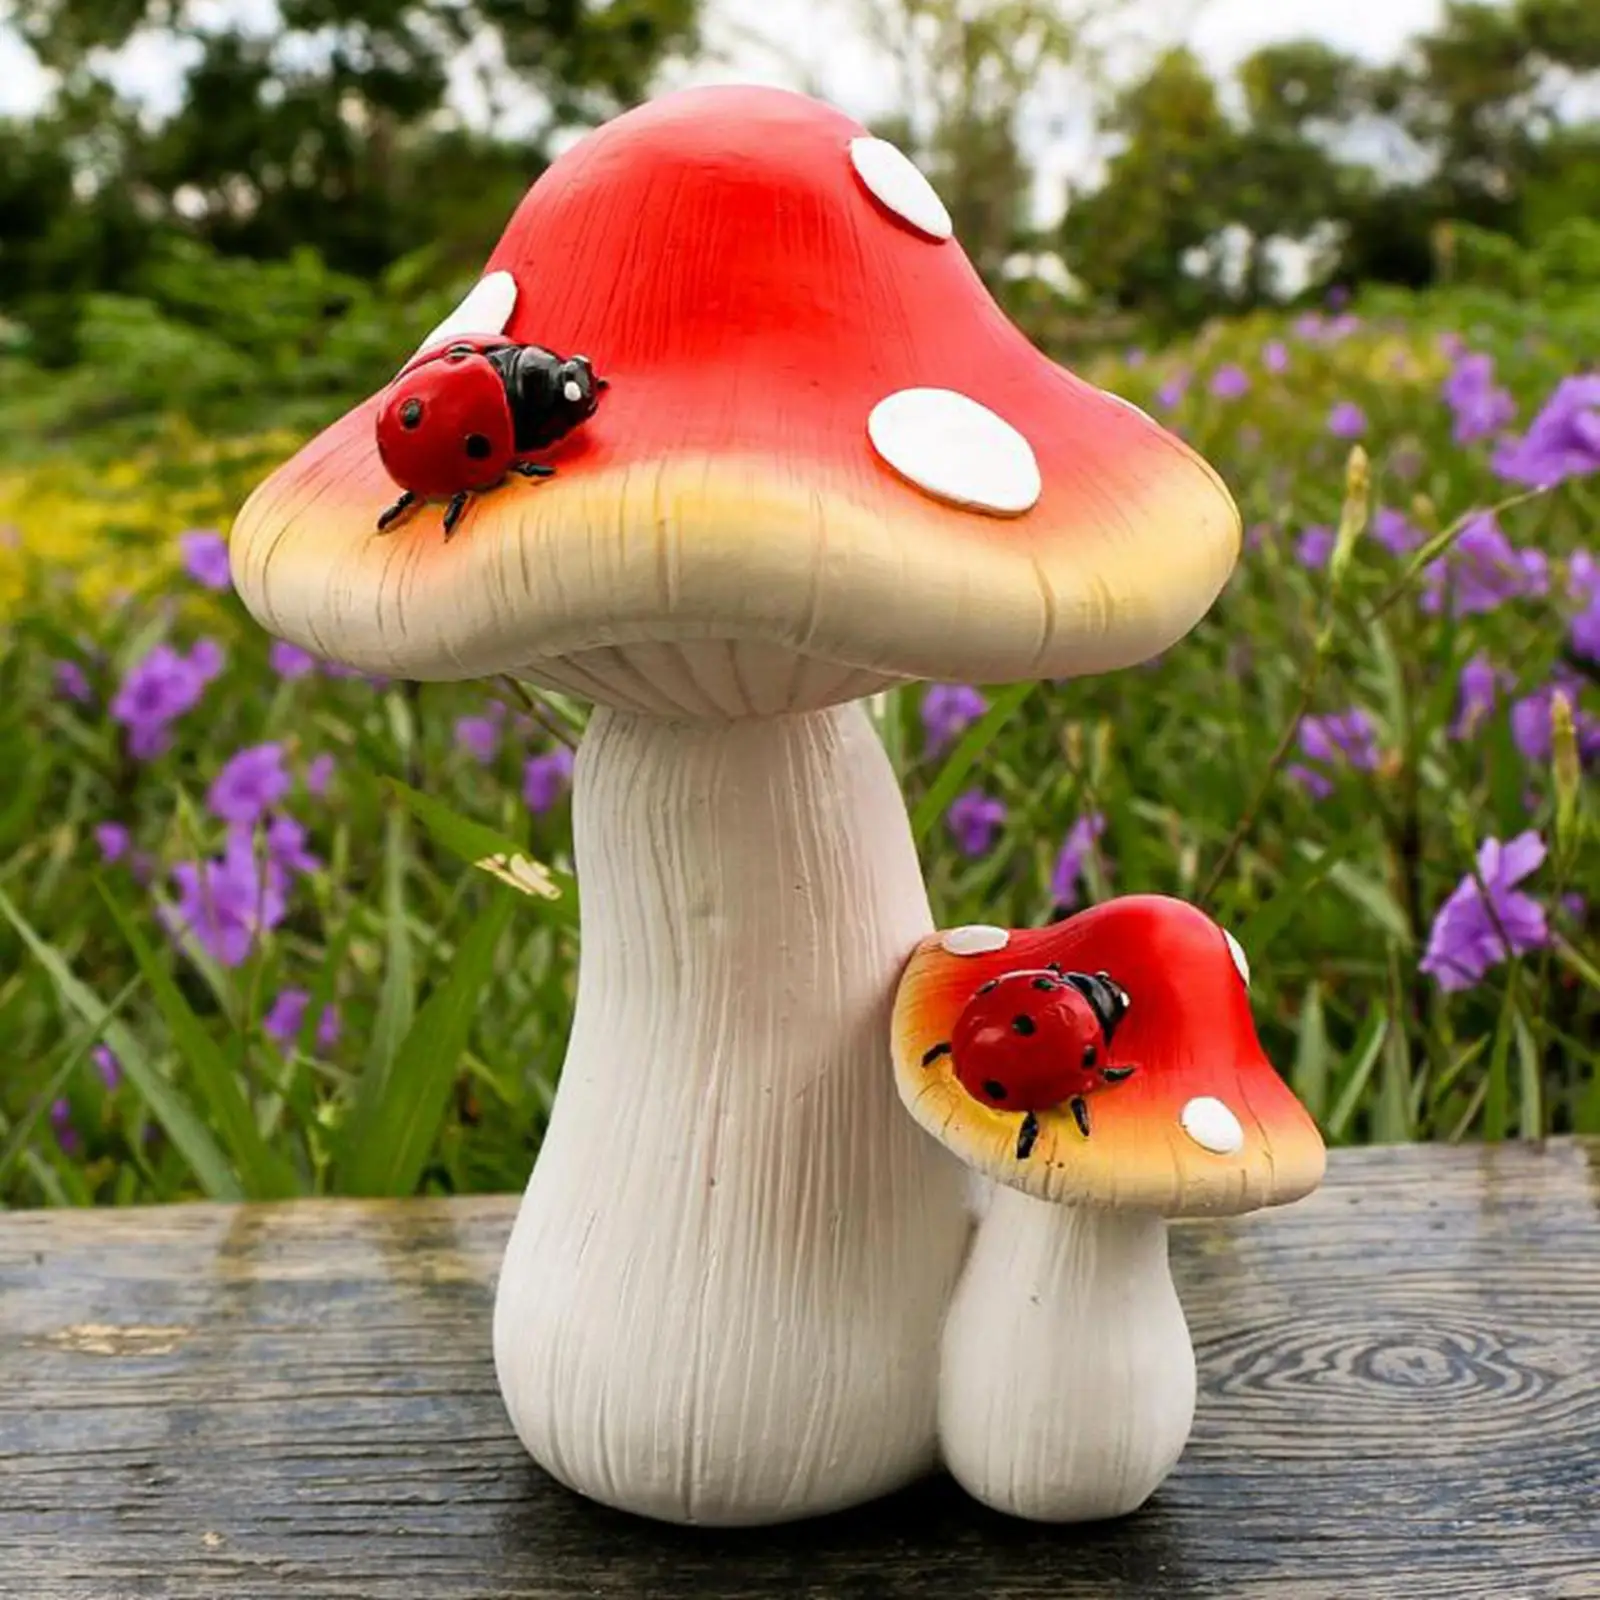 Simulation Mushroom Statue Mushroom Figures Miniature Mushroom Sculpture for Garden Home Outdoor Indoor Courtyard Ornament